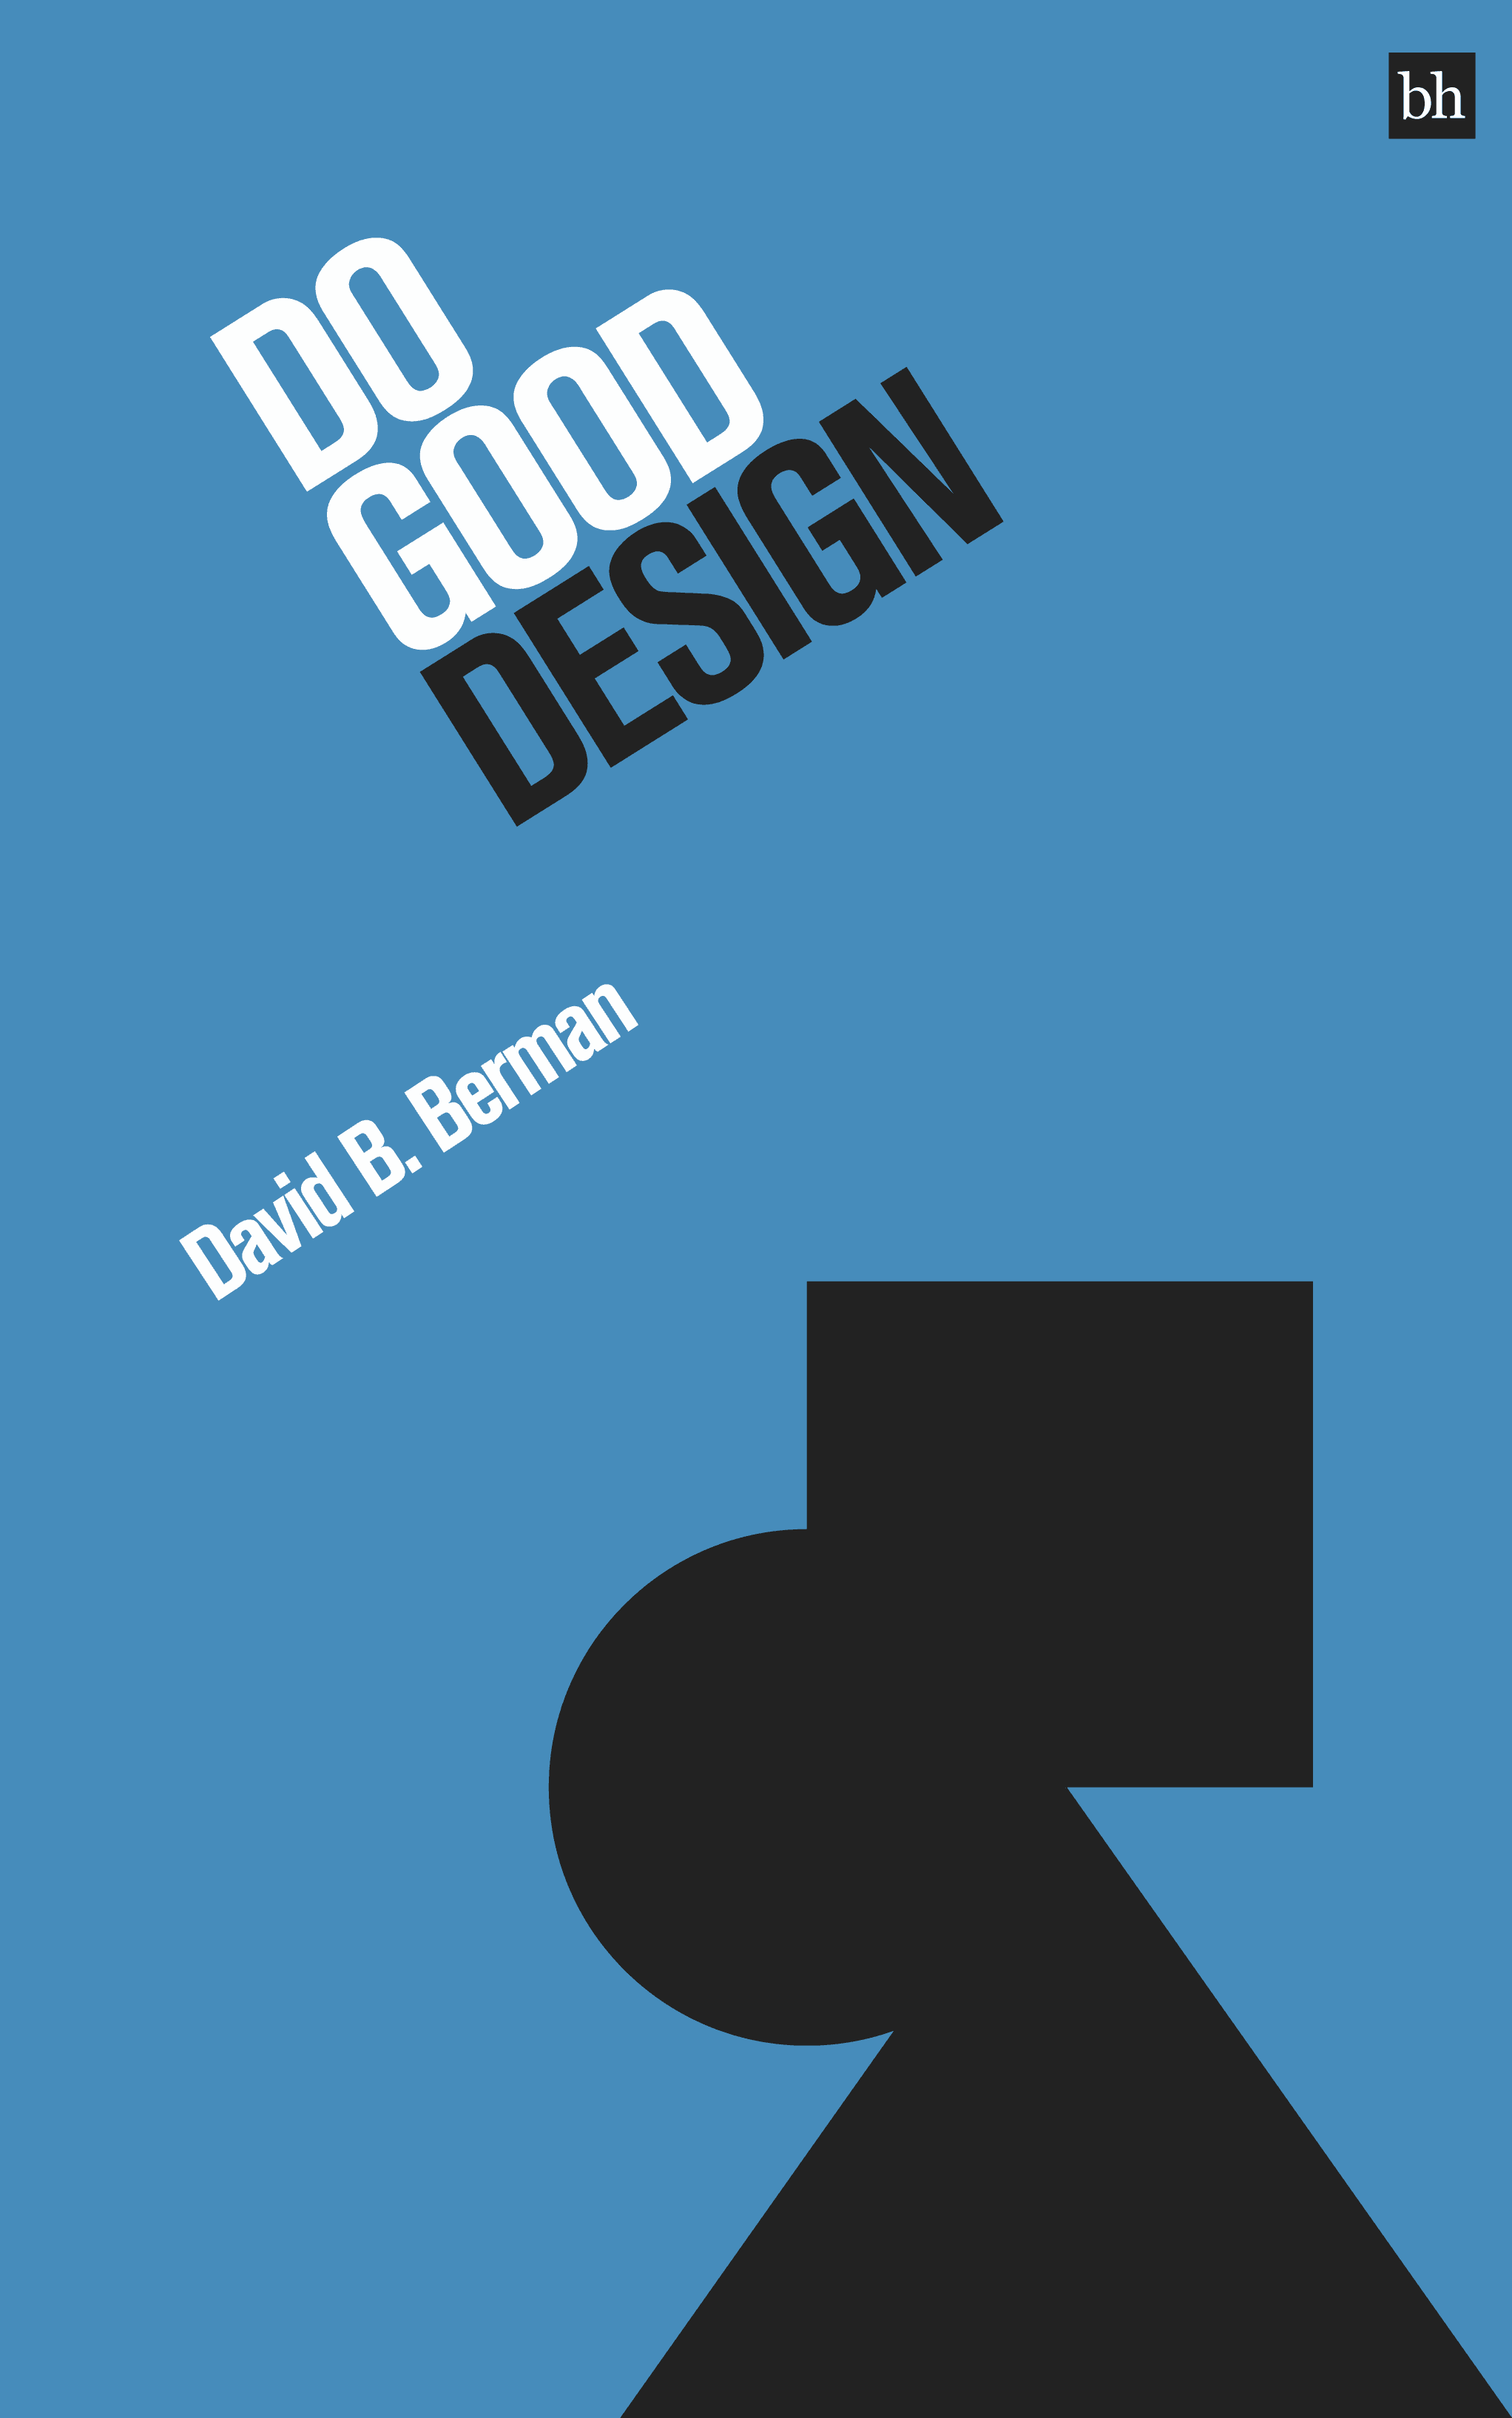 Do Good <s>Design</s> by David B. Berman